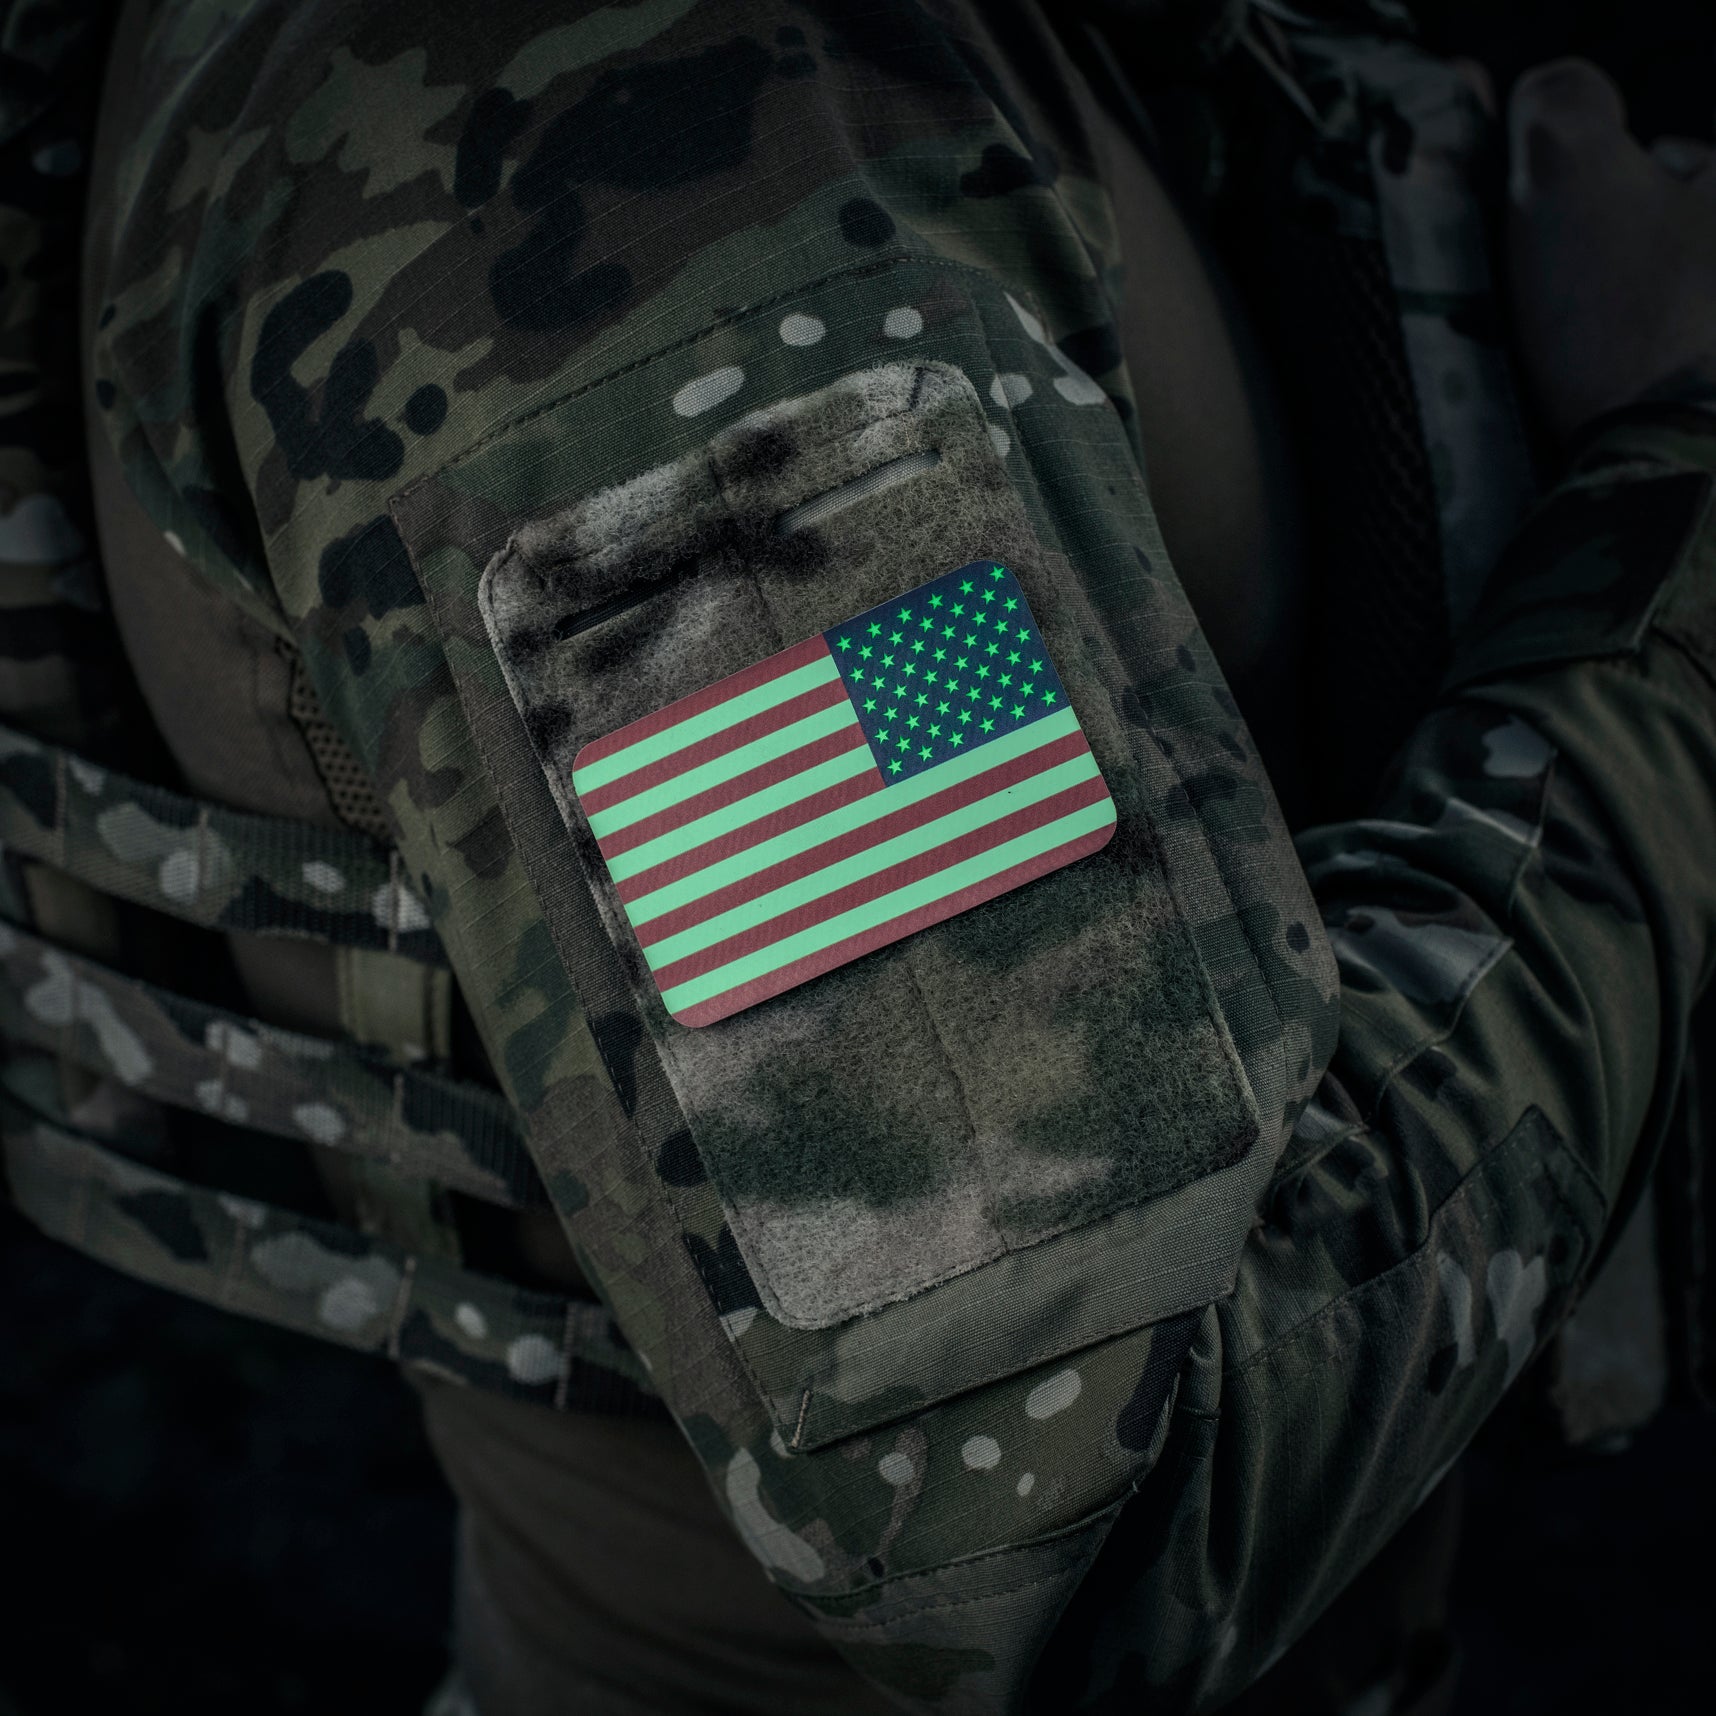 KRYDEX USA Flag IR Tactical Patch 3.5 x 2 – Krydex